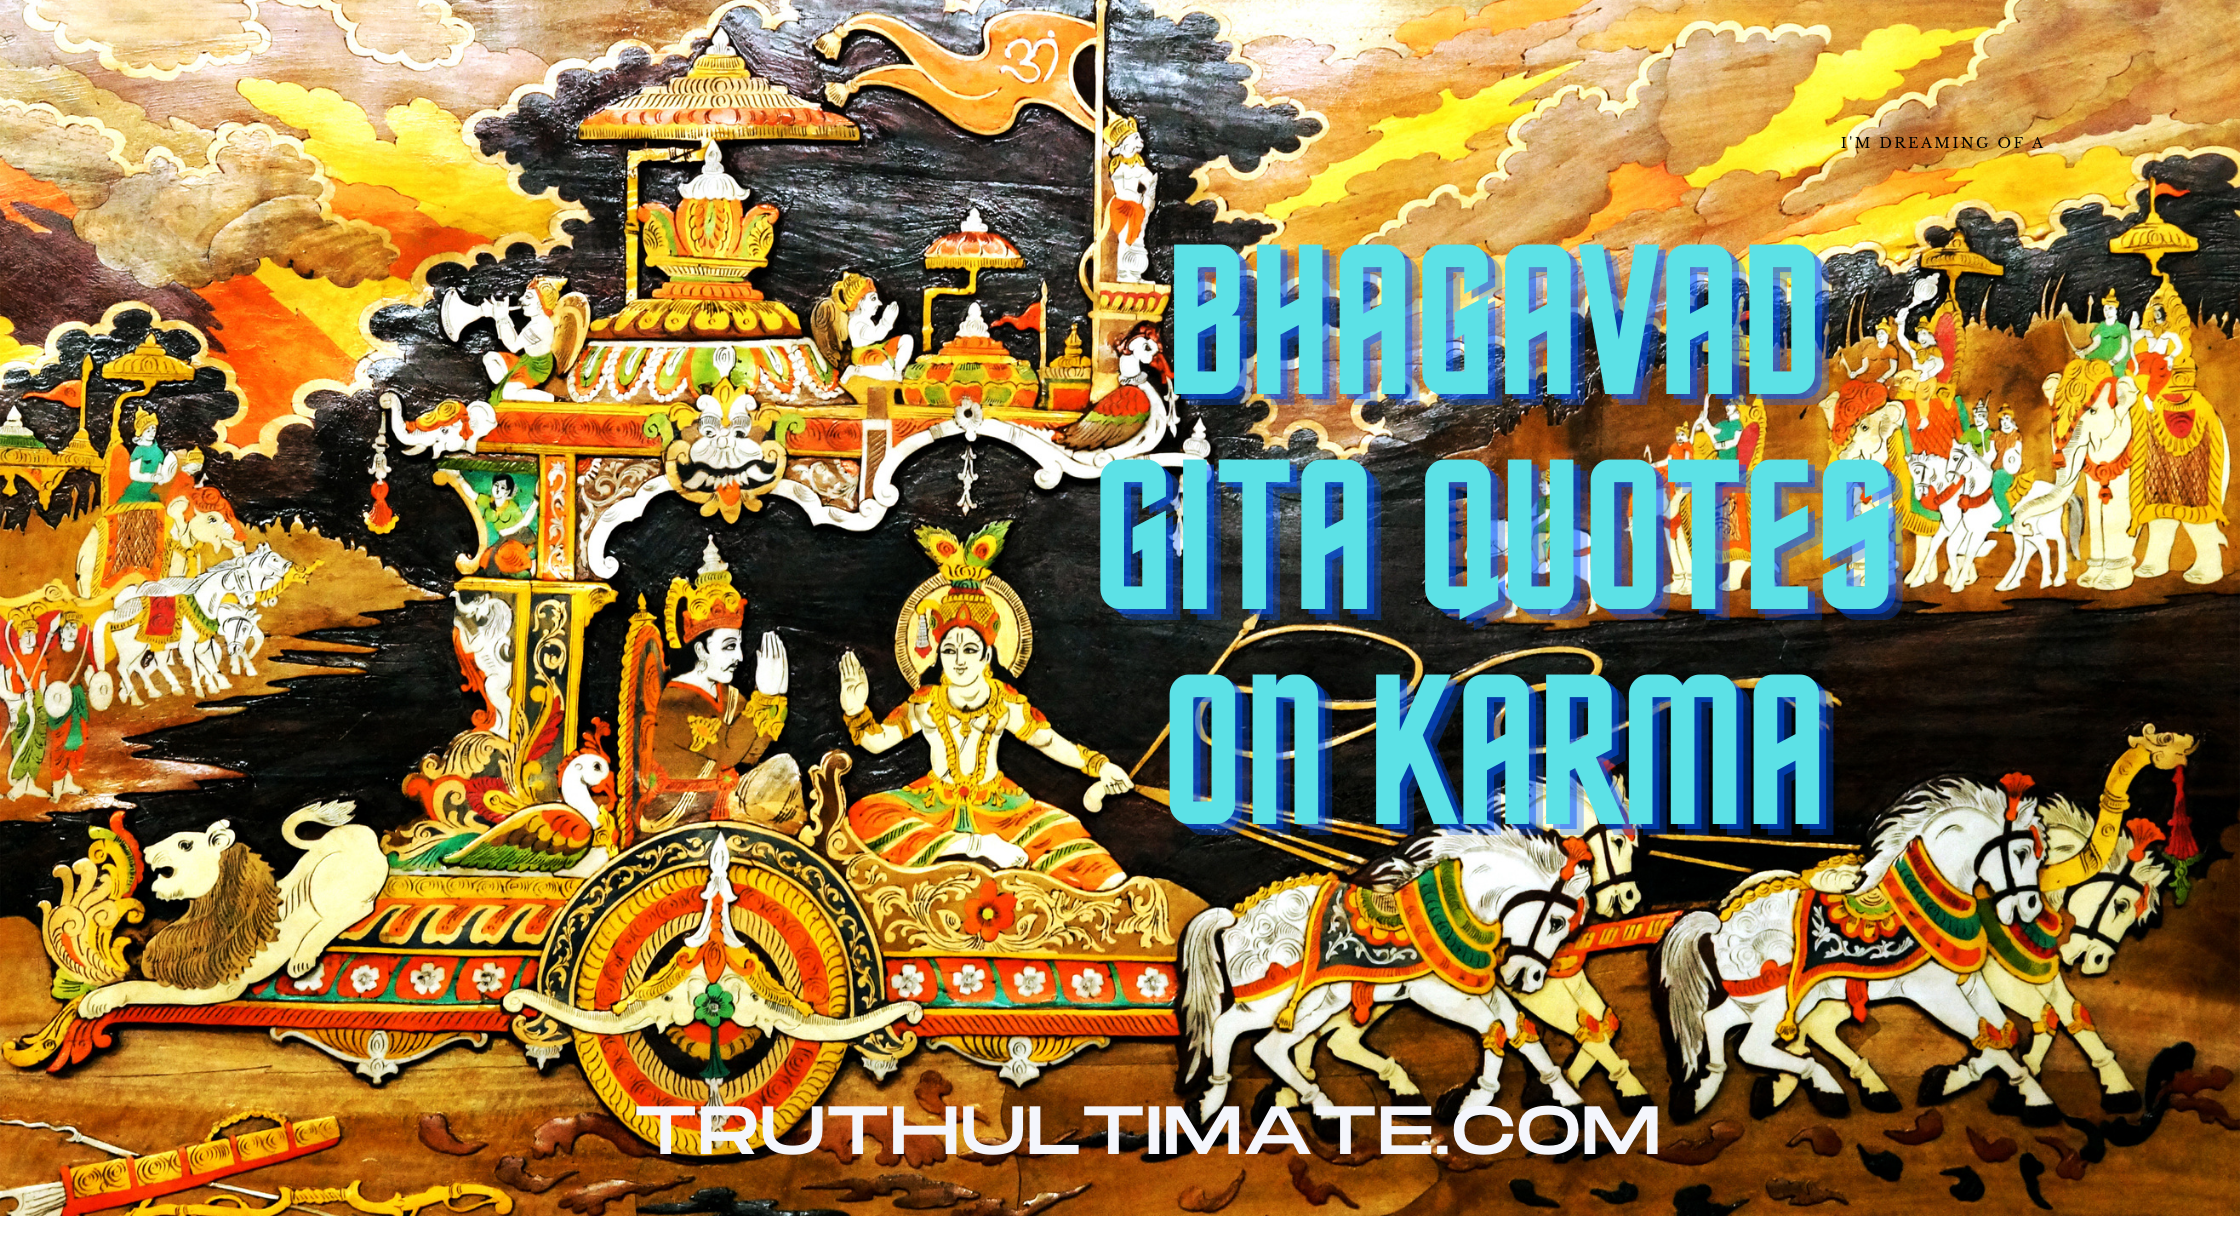 Karma Bhagavad Gita quotes